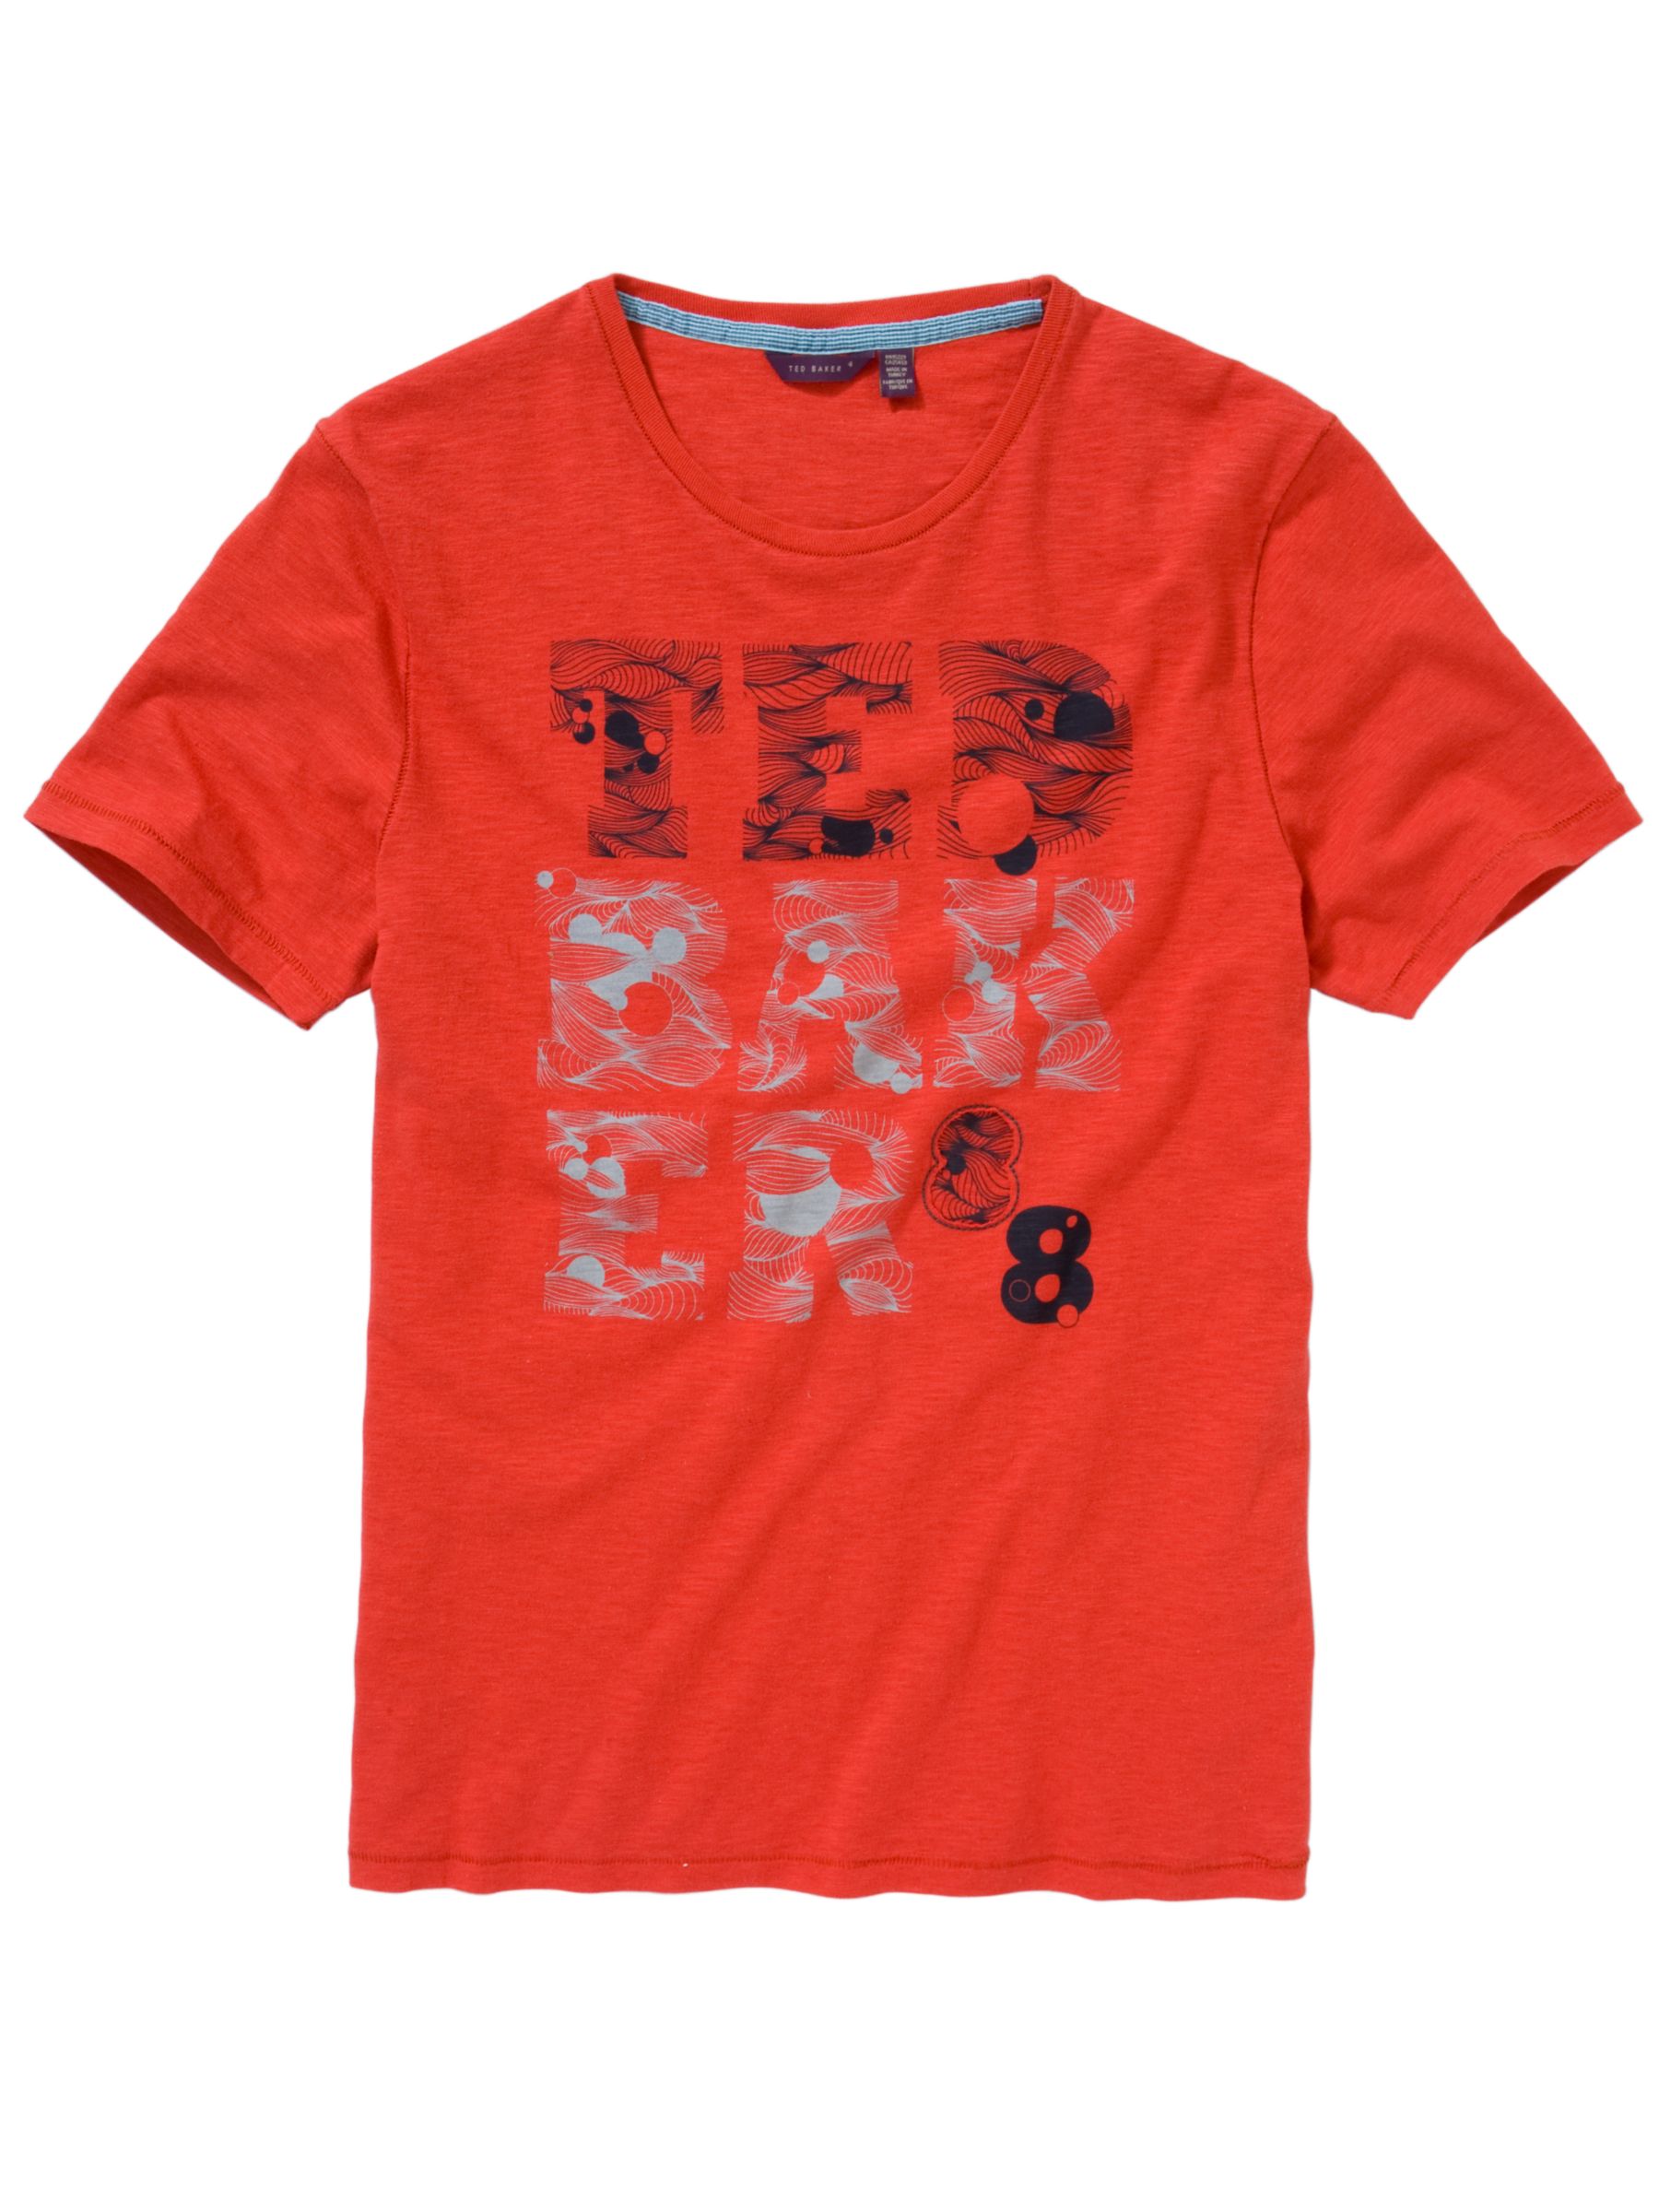 Ted Baker Swirl Brand T-Shirt, Red, XXL